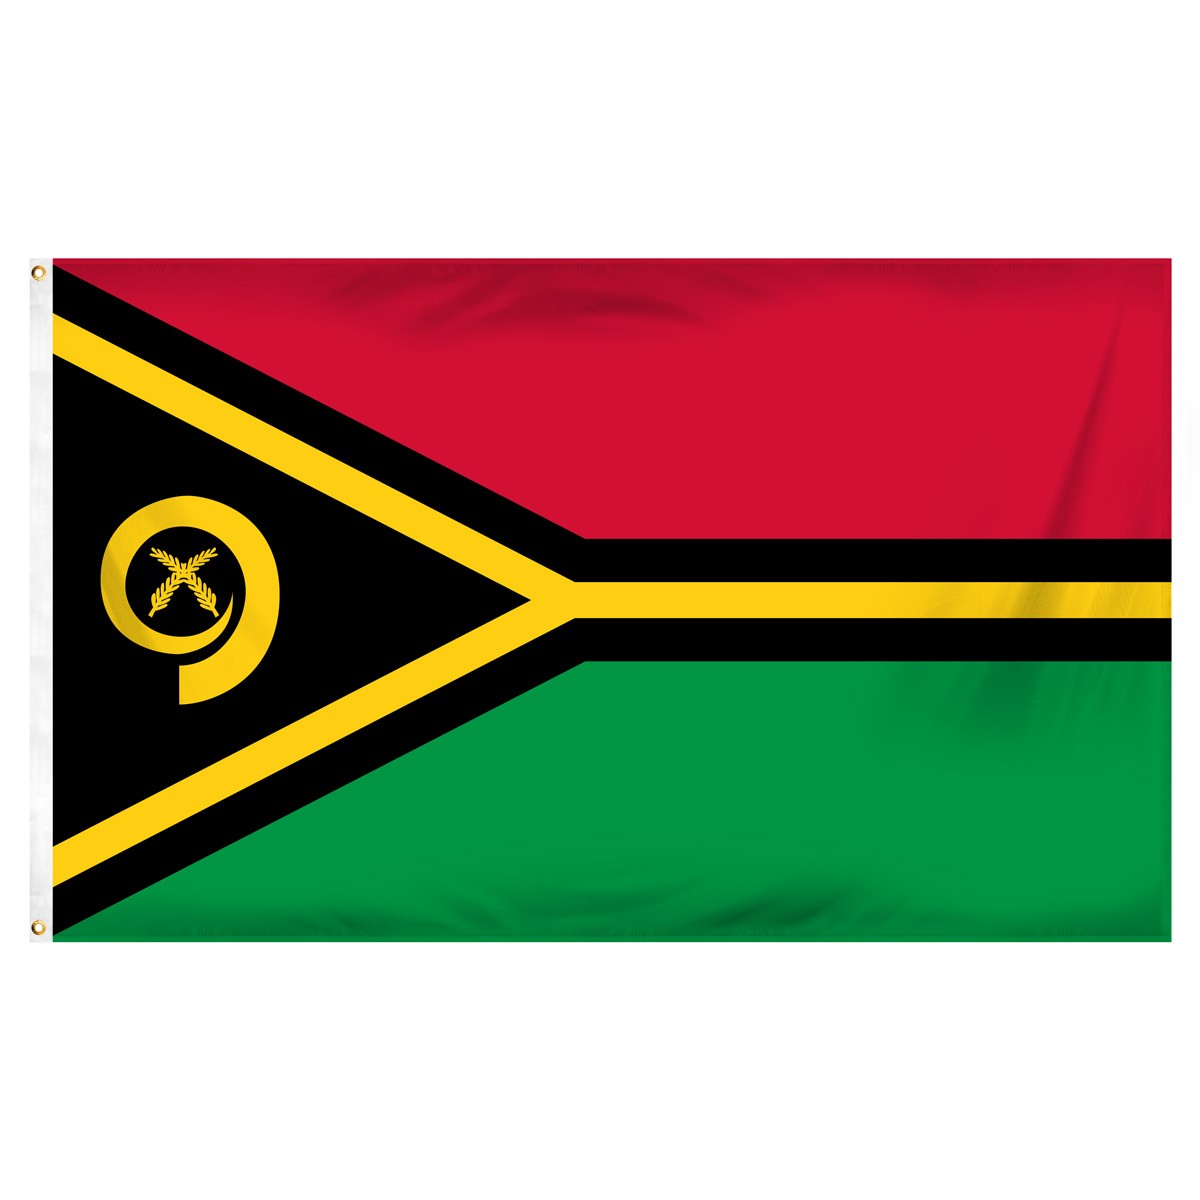 Vanuatu Swallow Pennant Flag